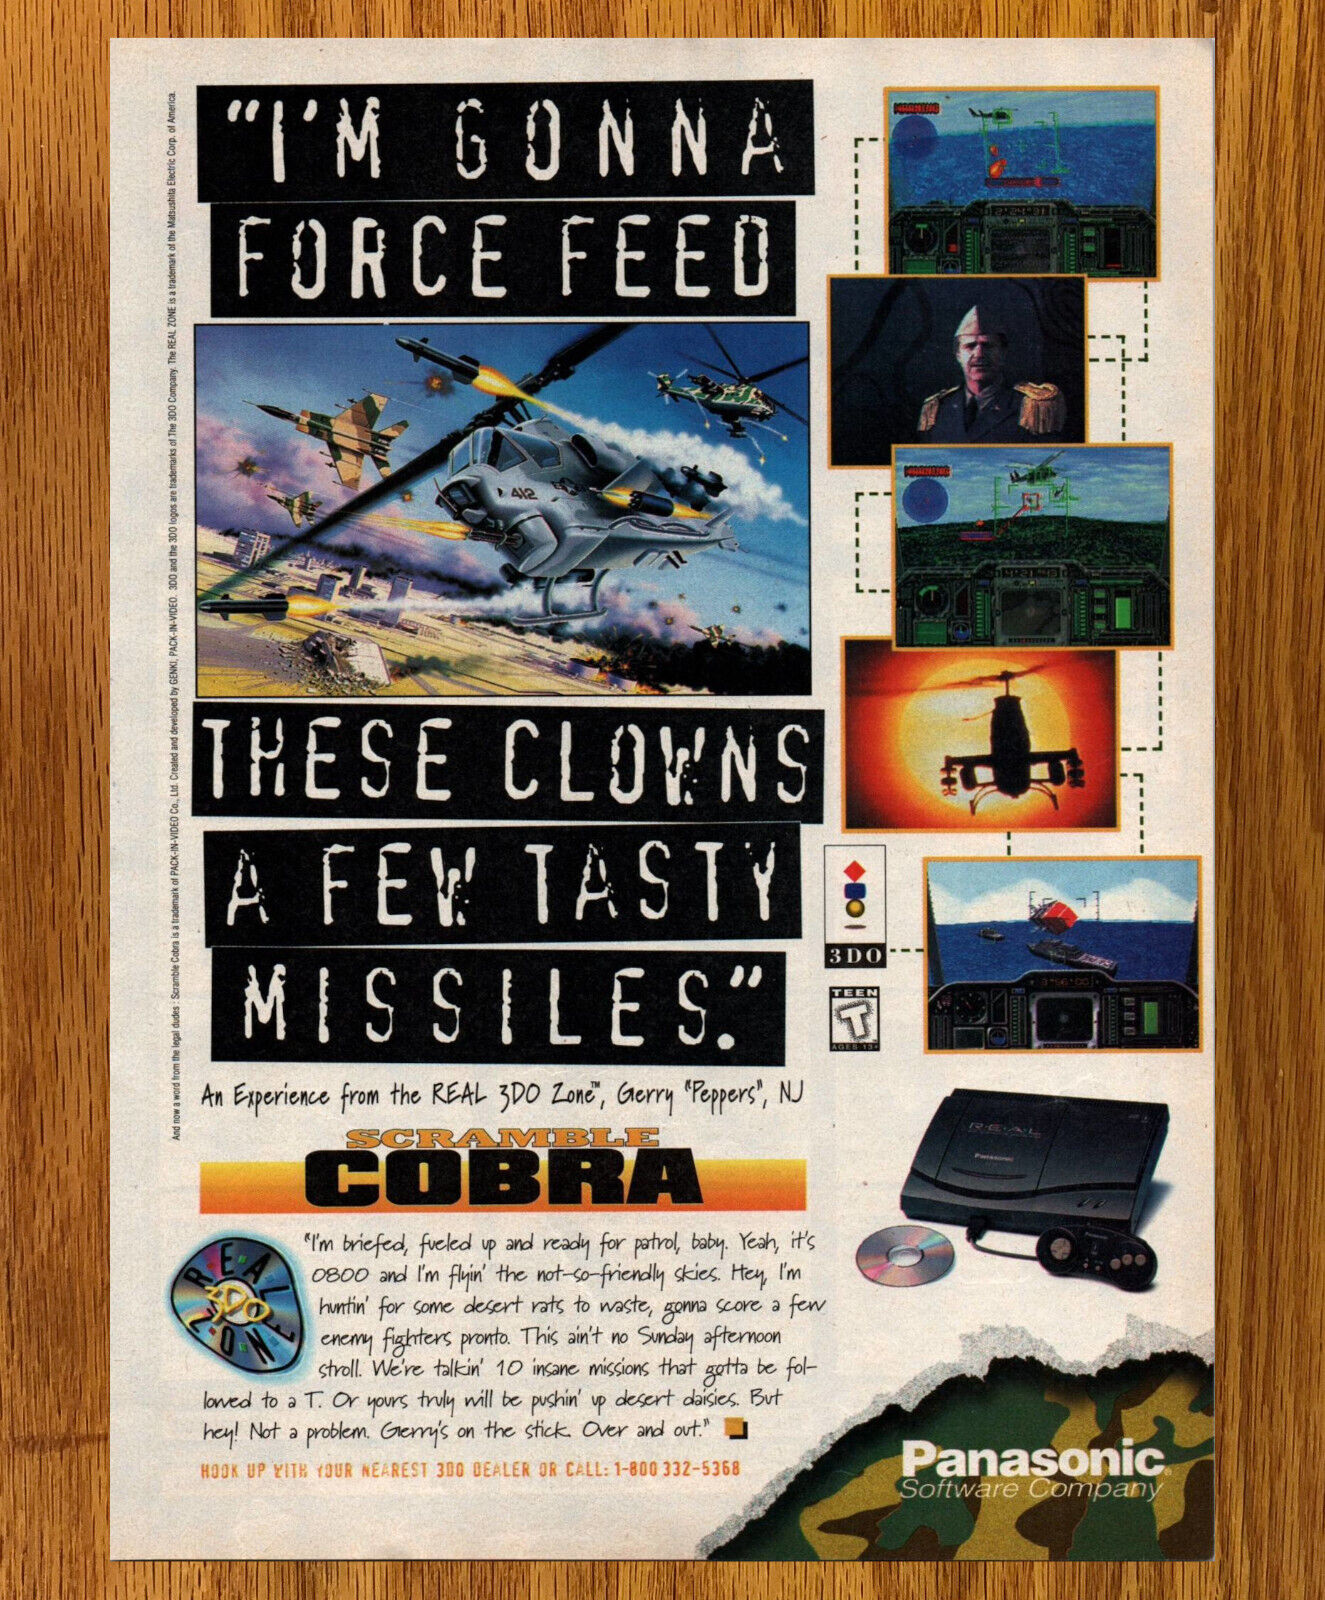 Cyberdillo Panasonic 3DO - Video Game Print Ad / Poster Promo Art 1996